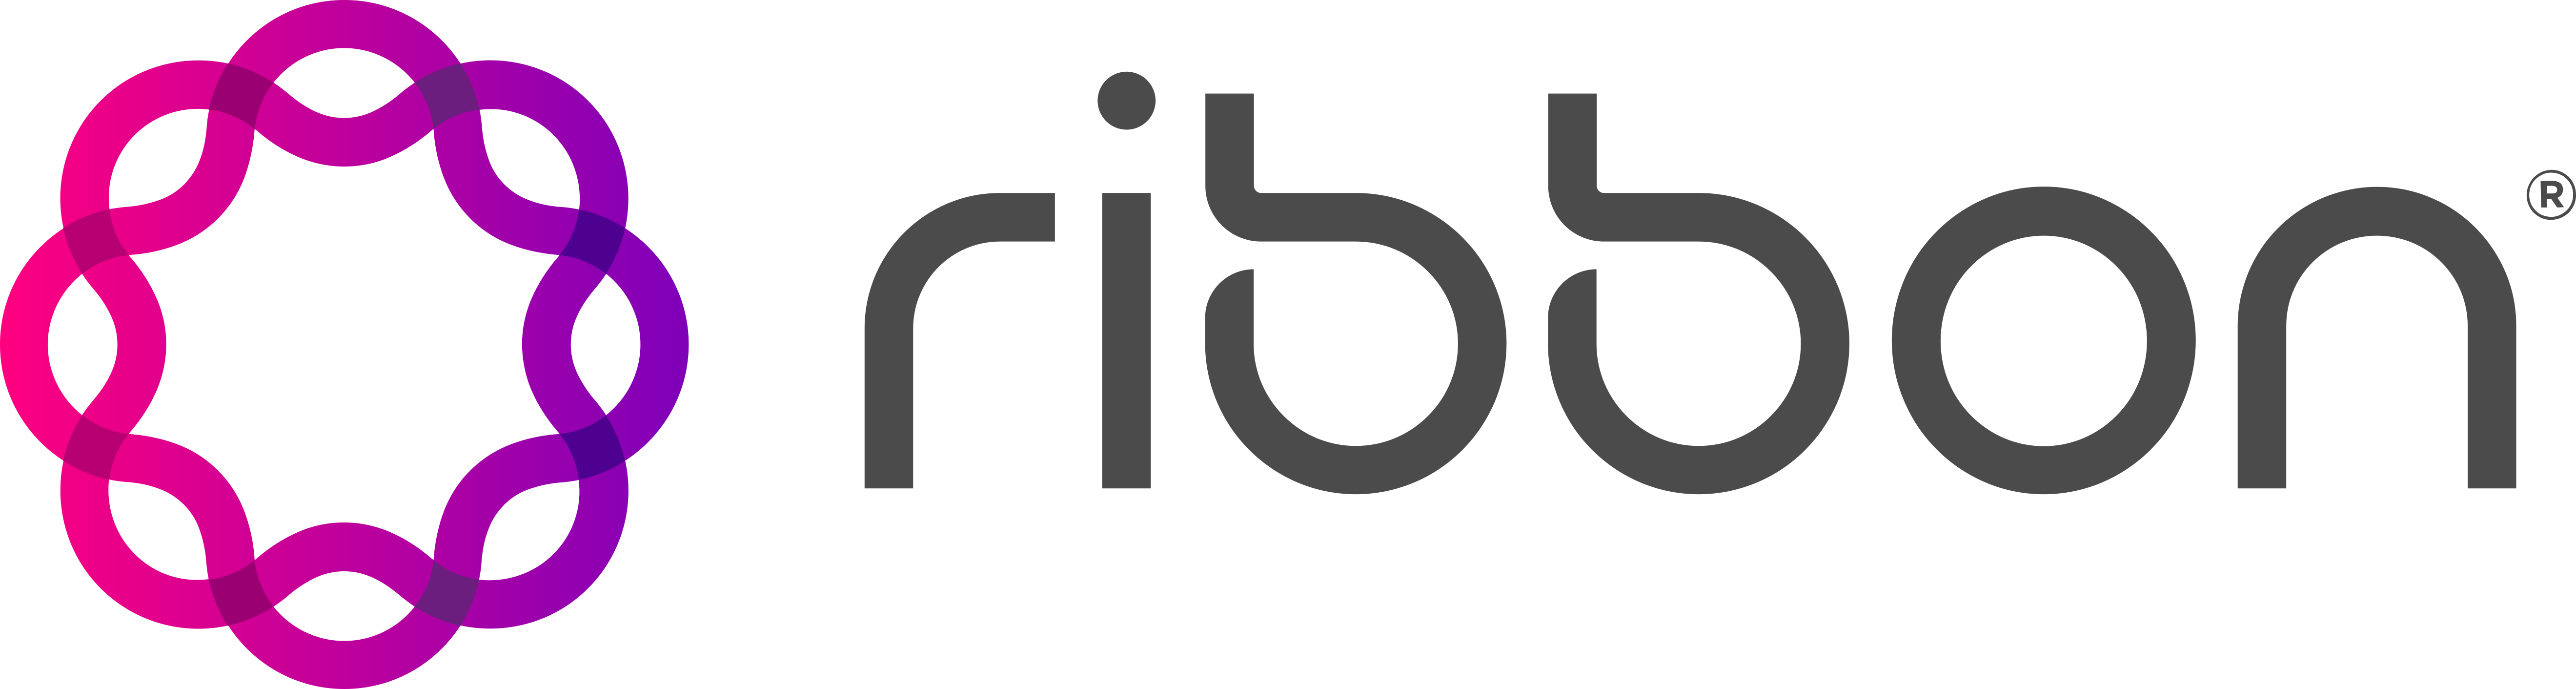 ribbon-logo-color-1